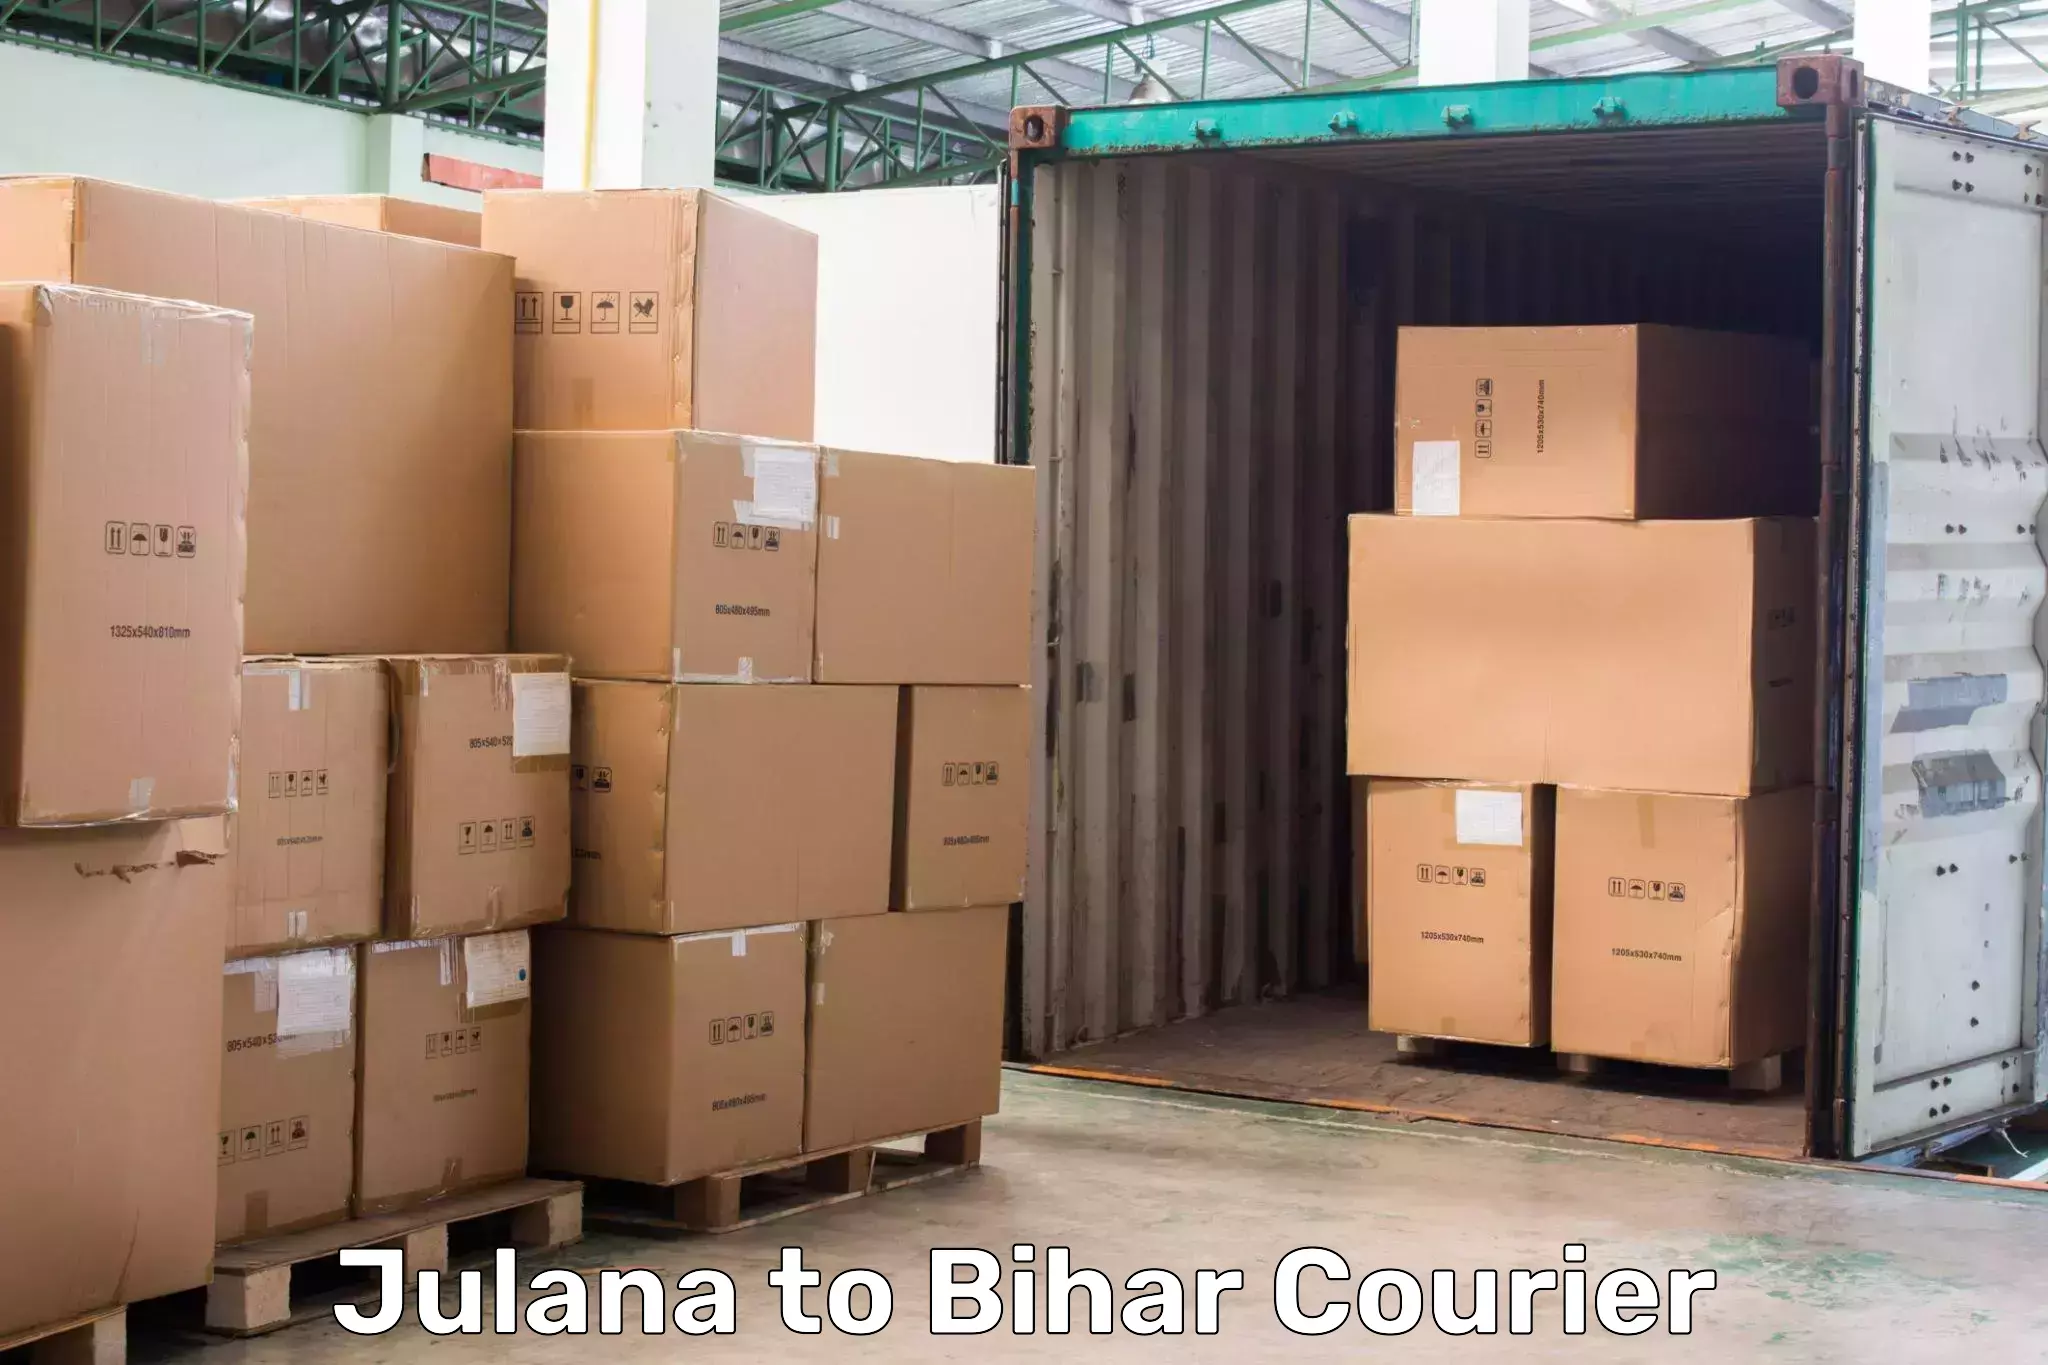 Express postal services Julana to Biraul